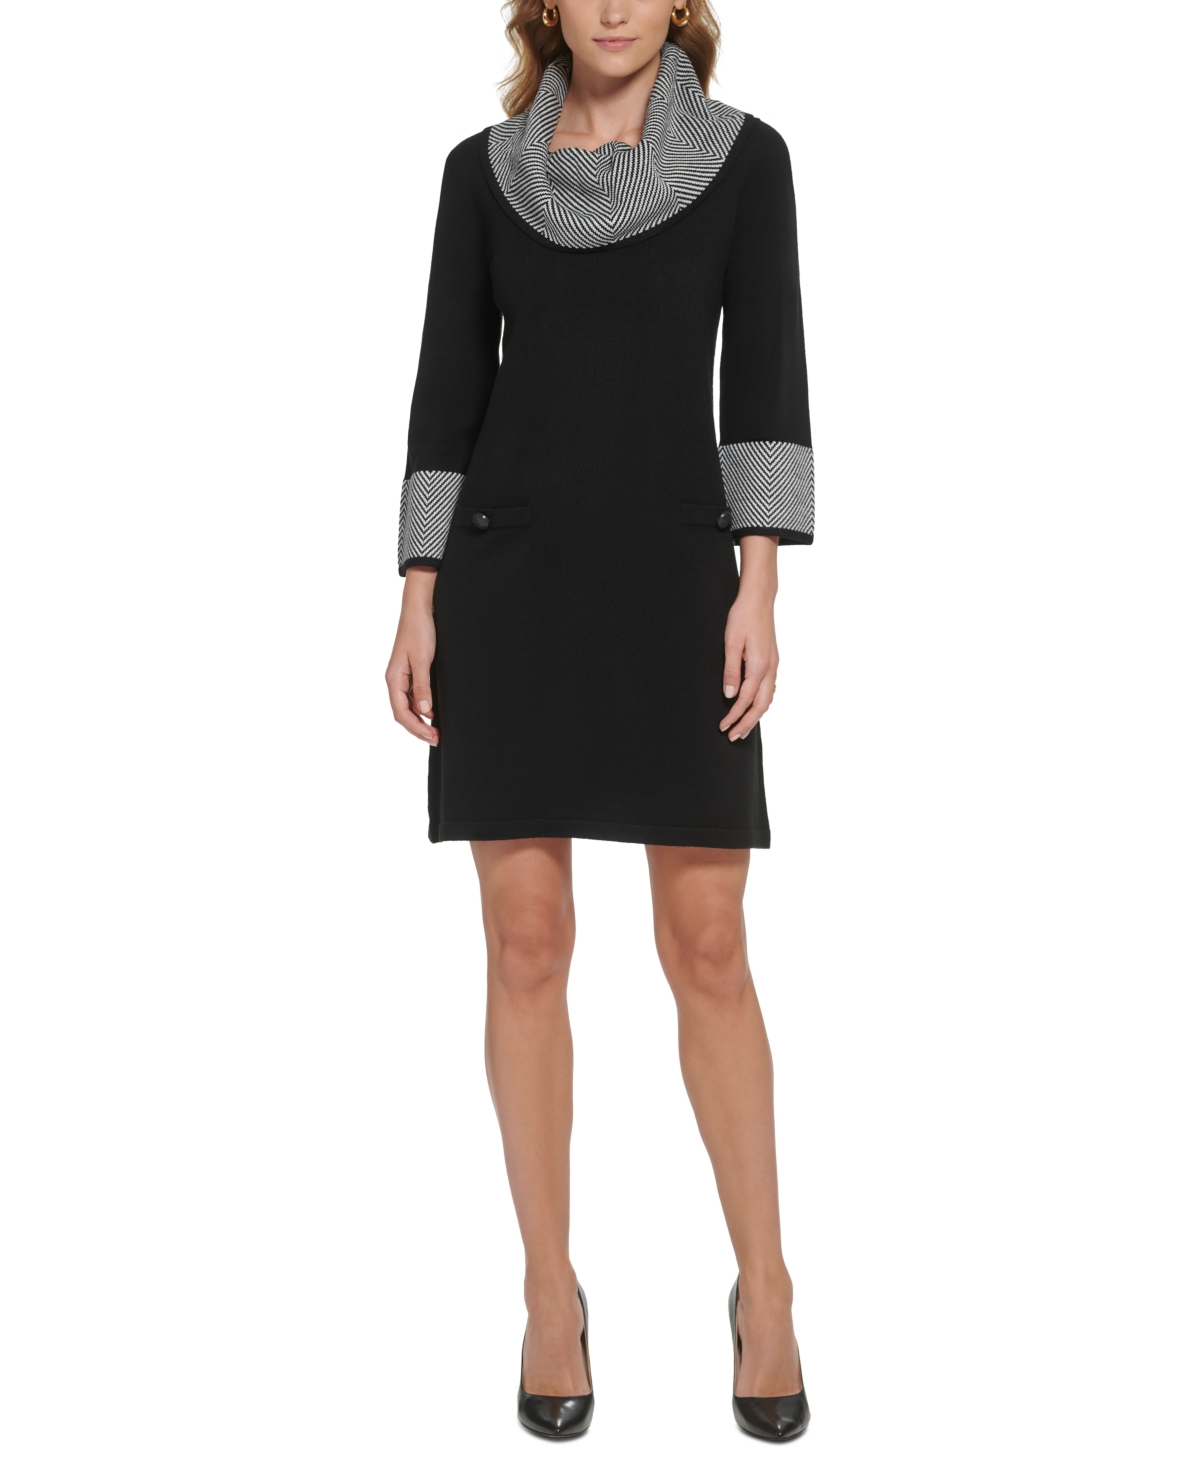 Women's Contrast-Trim Cowlneck Sweater Dress - Black Ivory